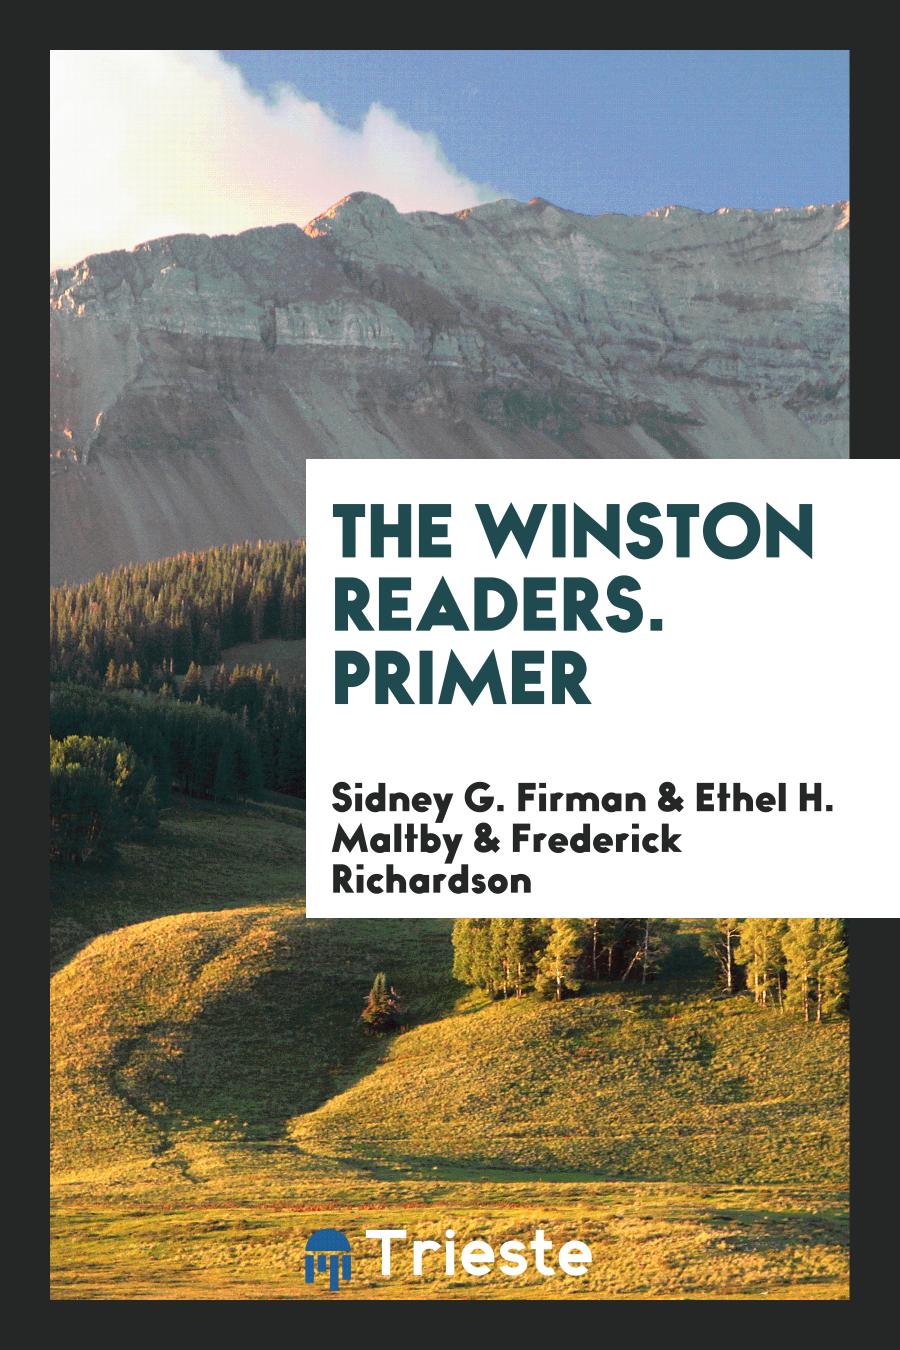 The Winston Readers. Primer